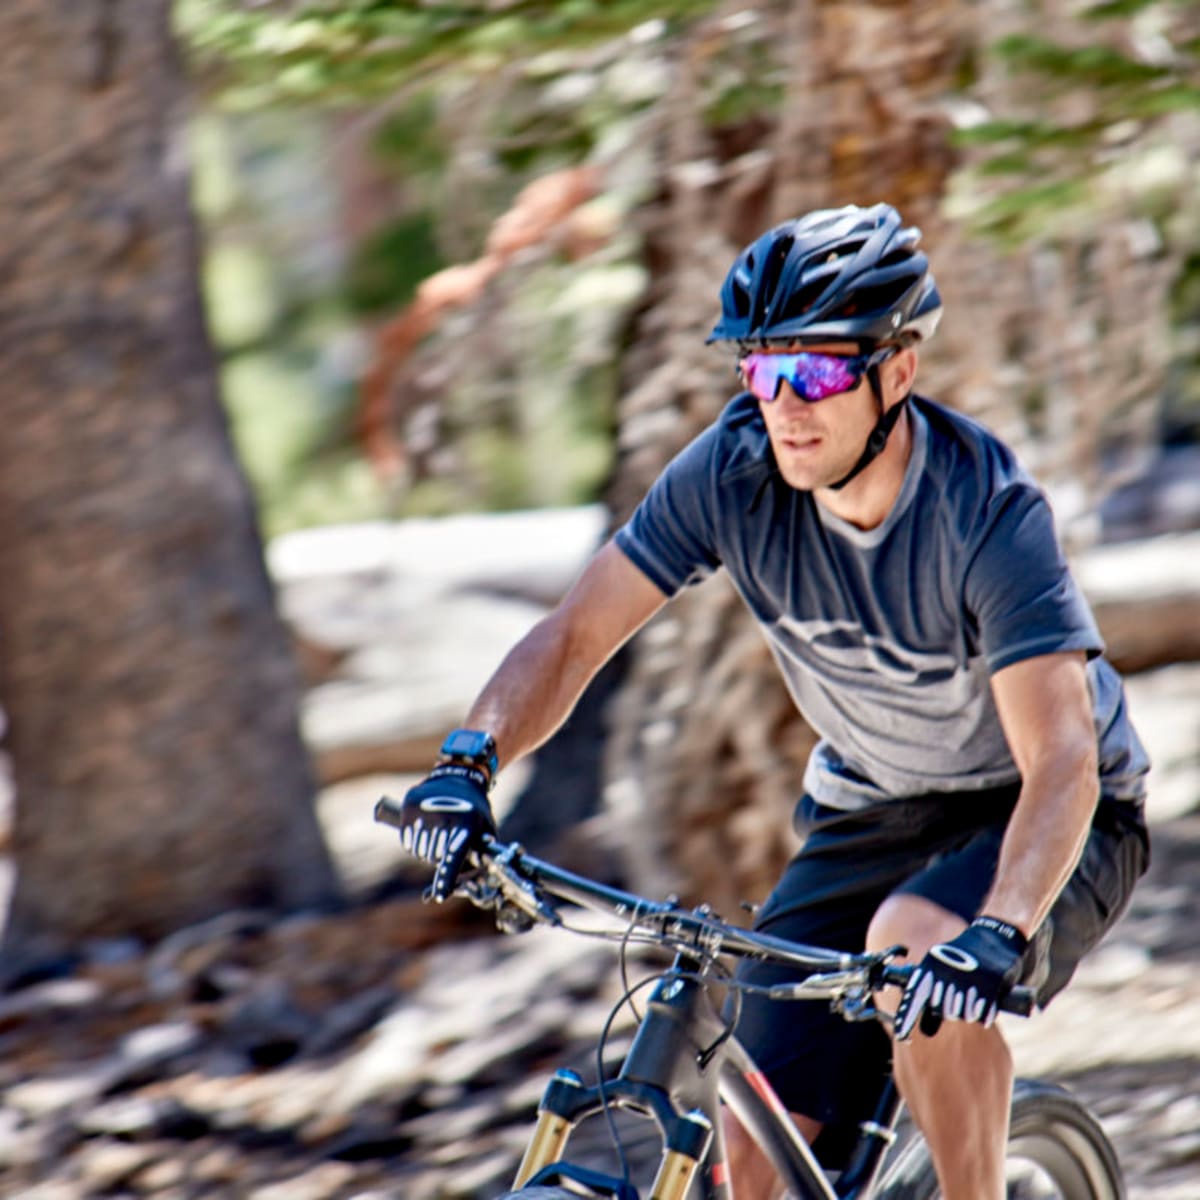 Oakley's Prizm lens mountain biking confidence - Journal